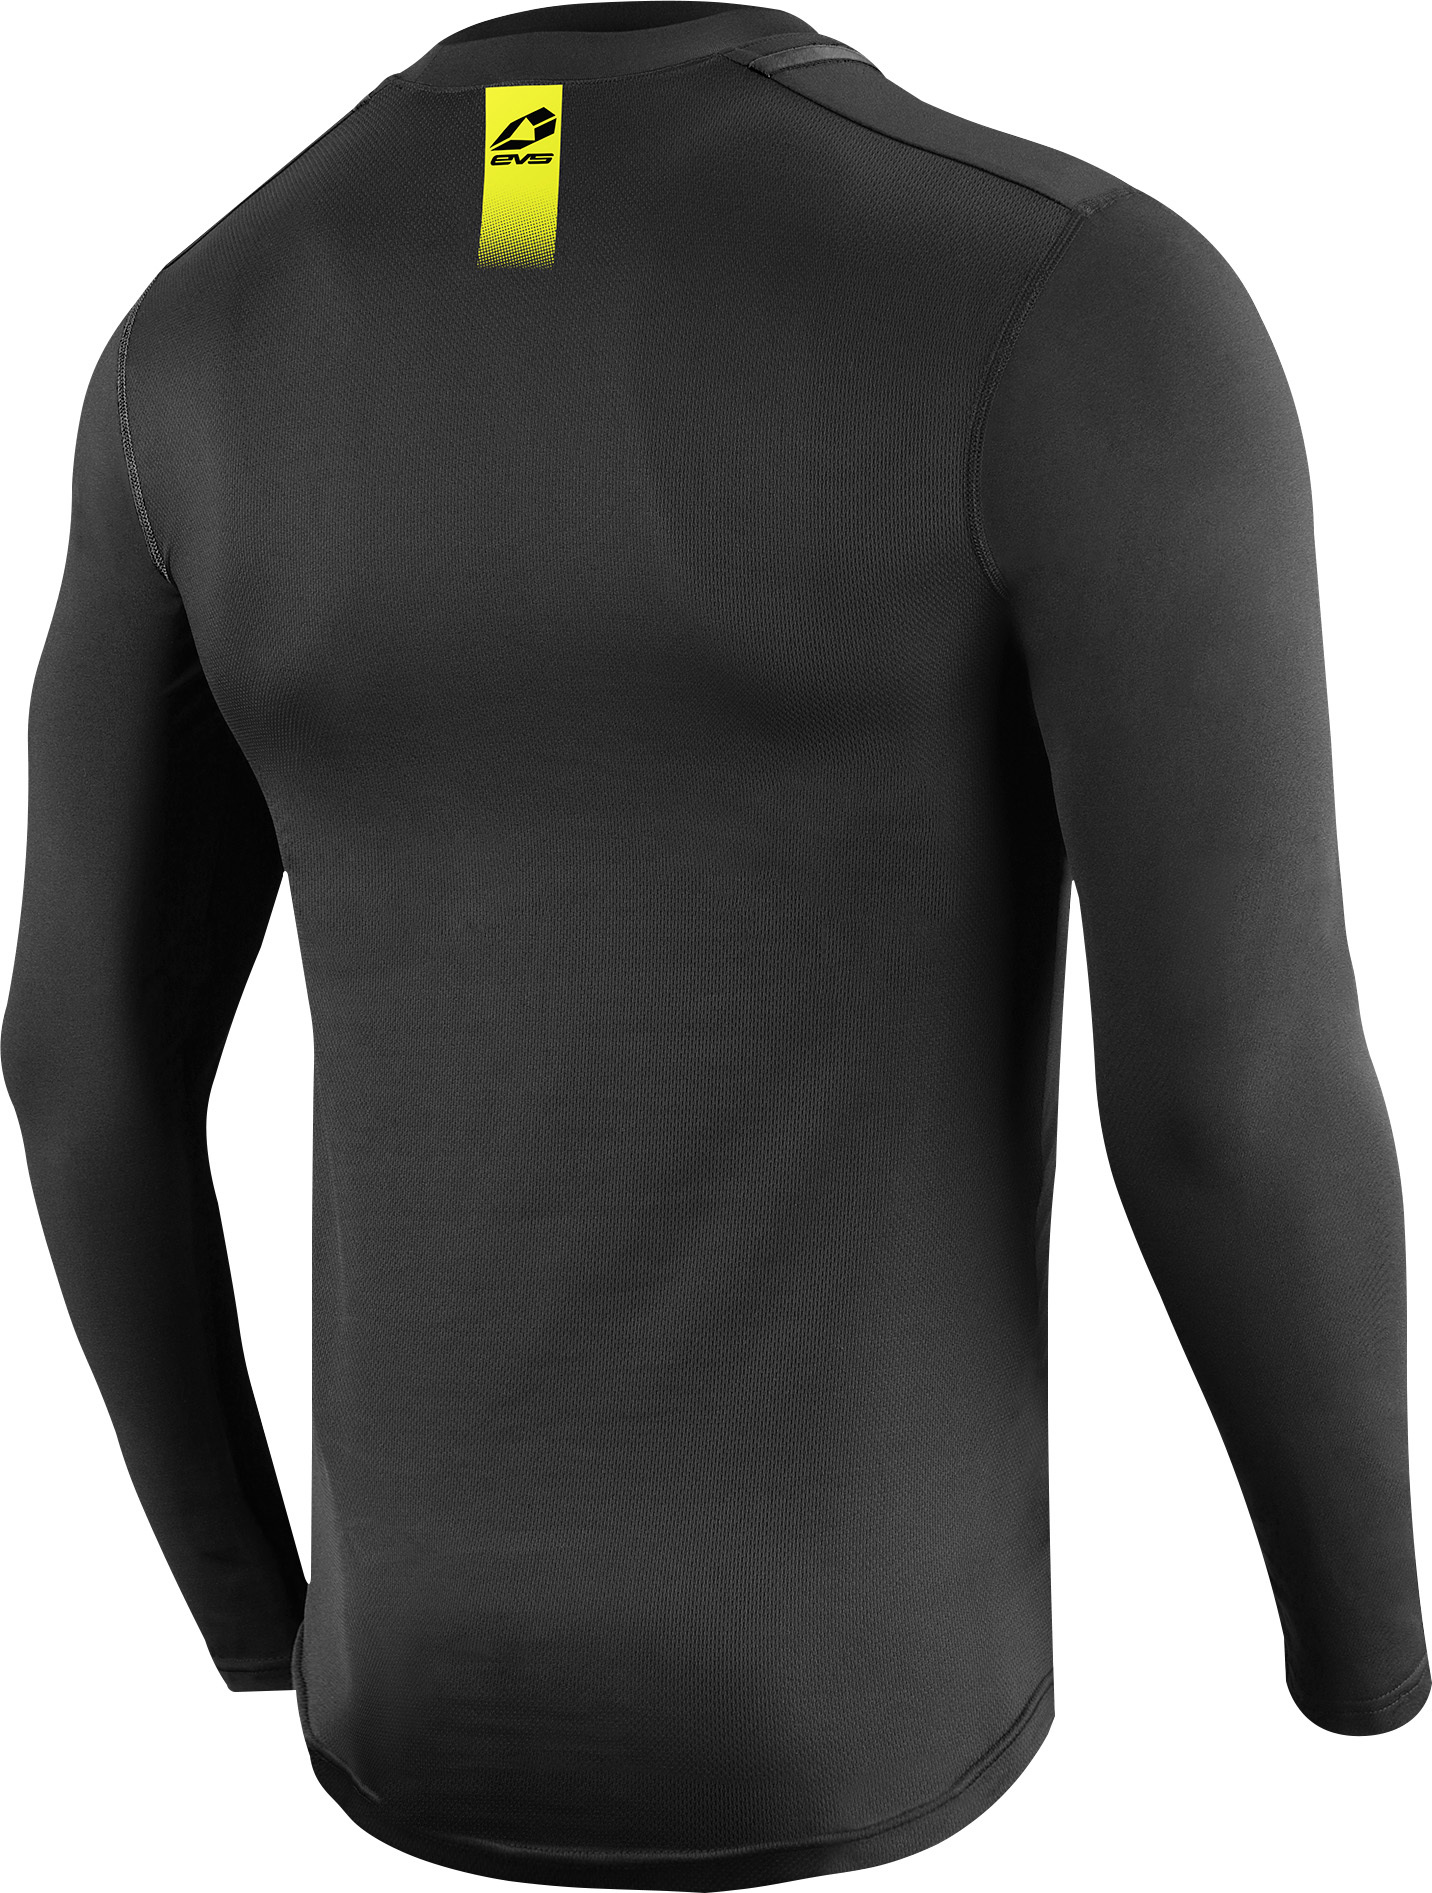 Long Sleeve Tug Shirt Black 2X-Large - Click Image to Close